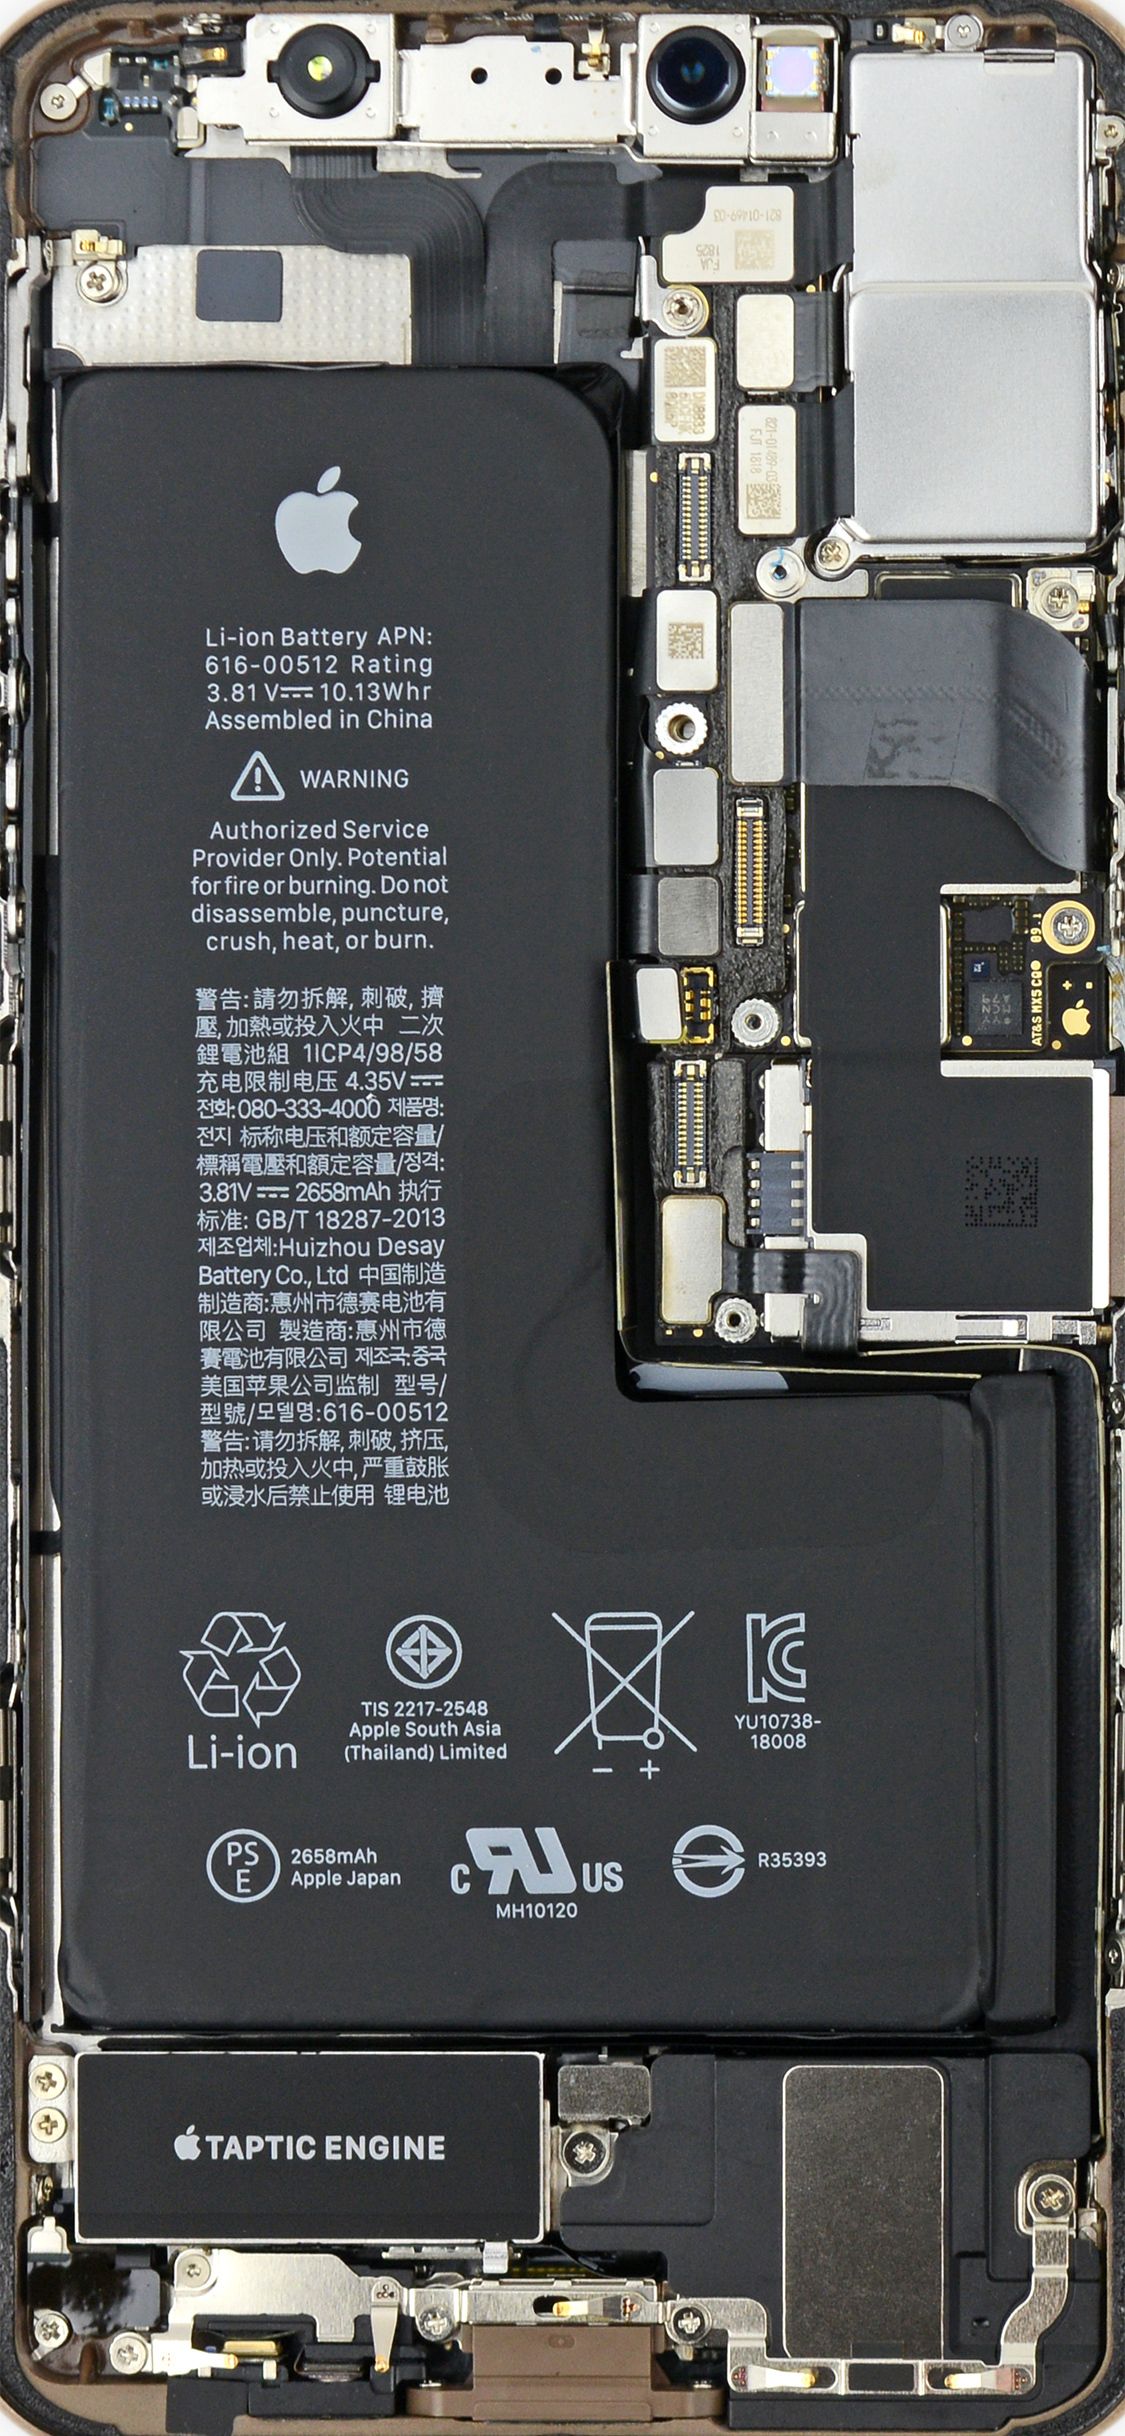 Teardown Finds iPhone SE and iPhone 5s Displays Interchangeable - MacRumors